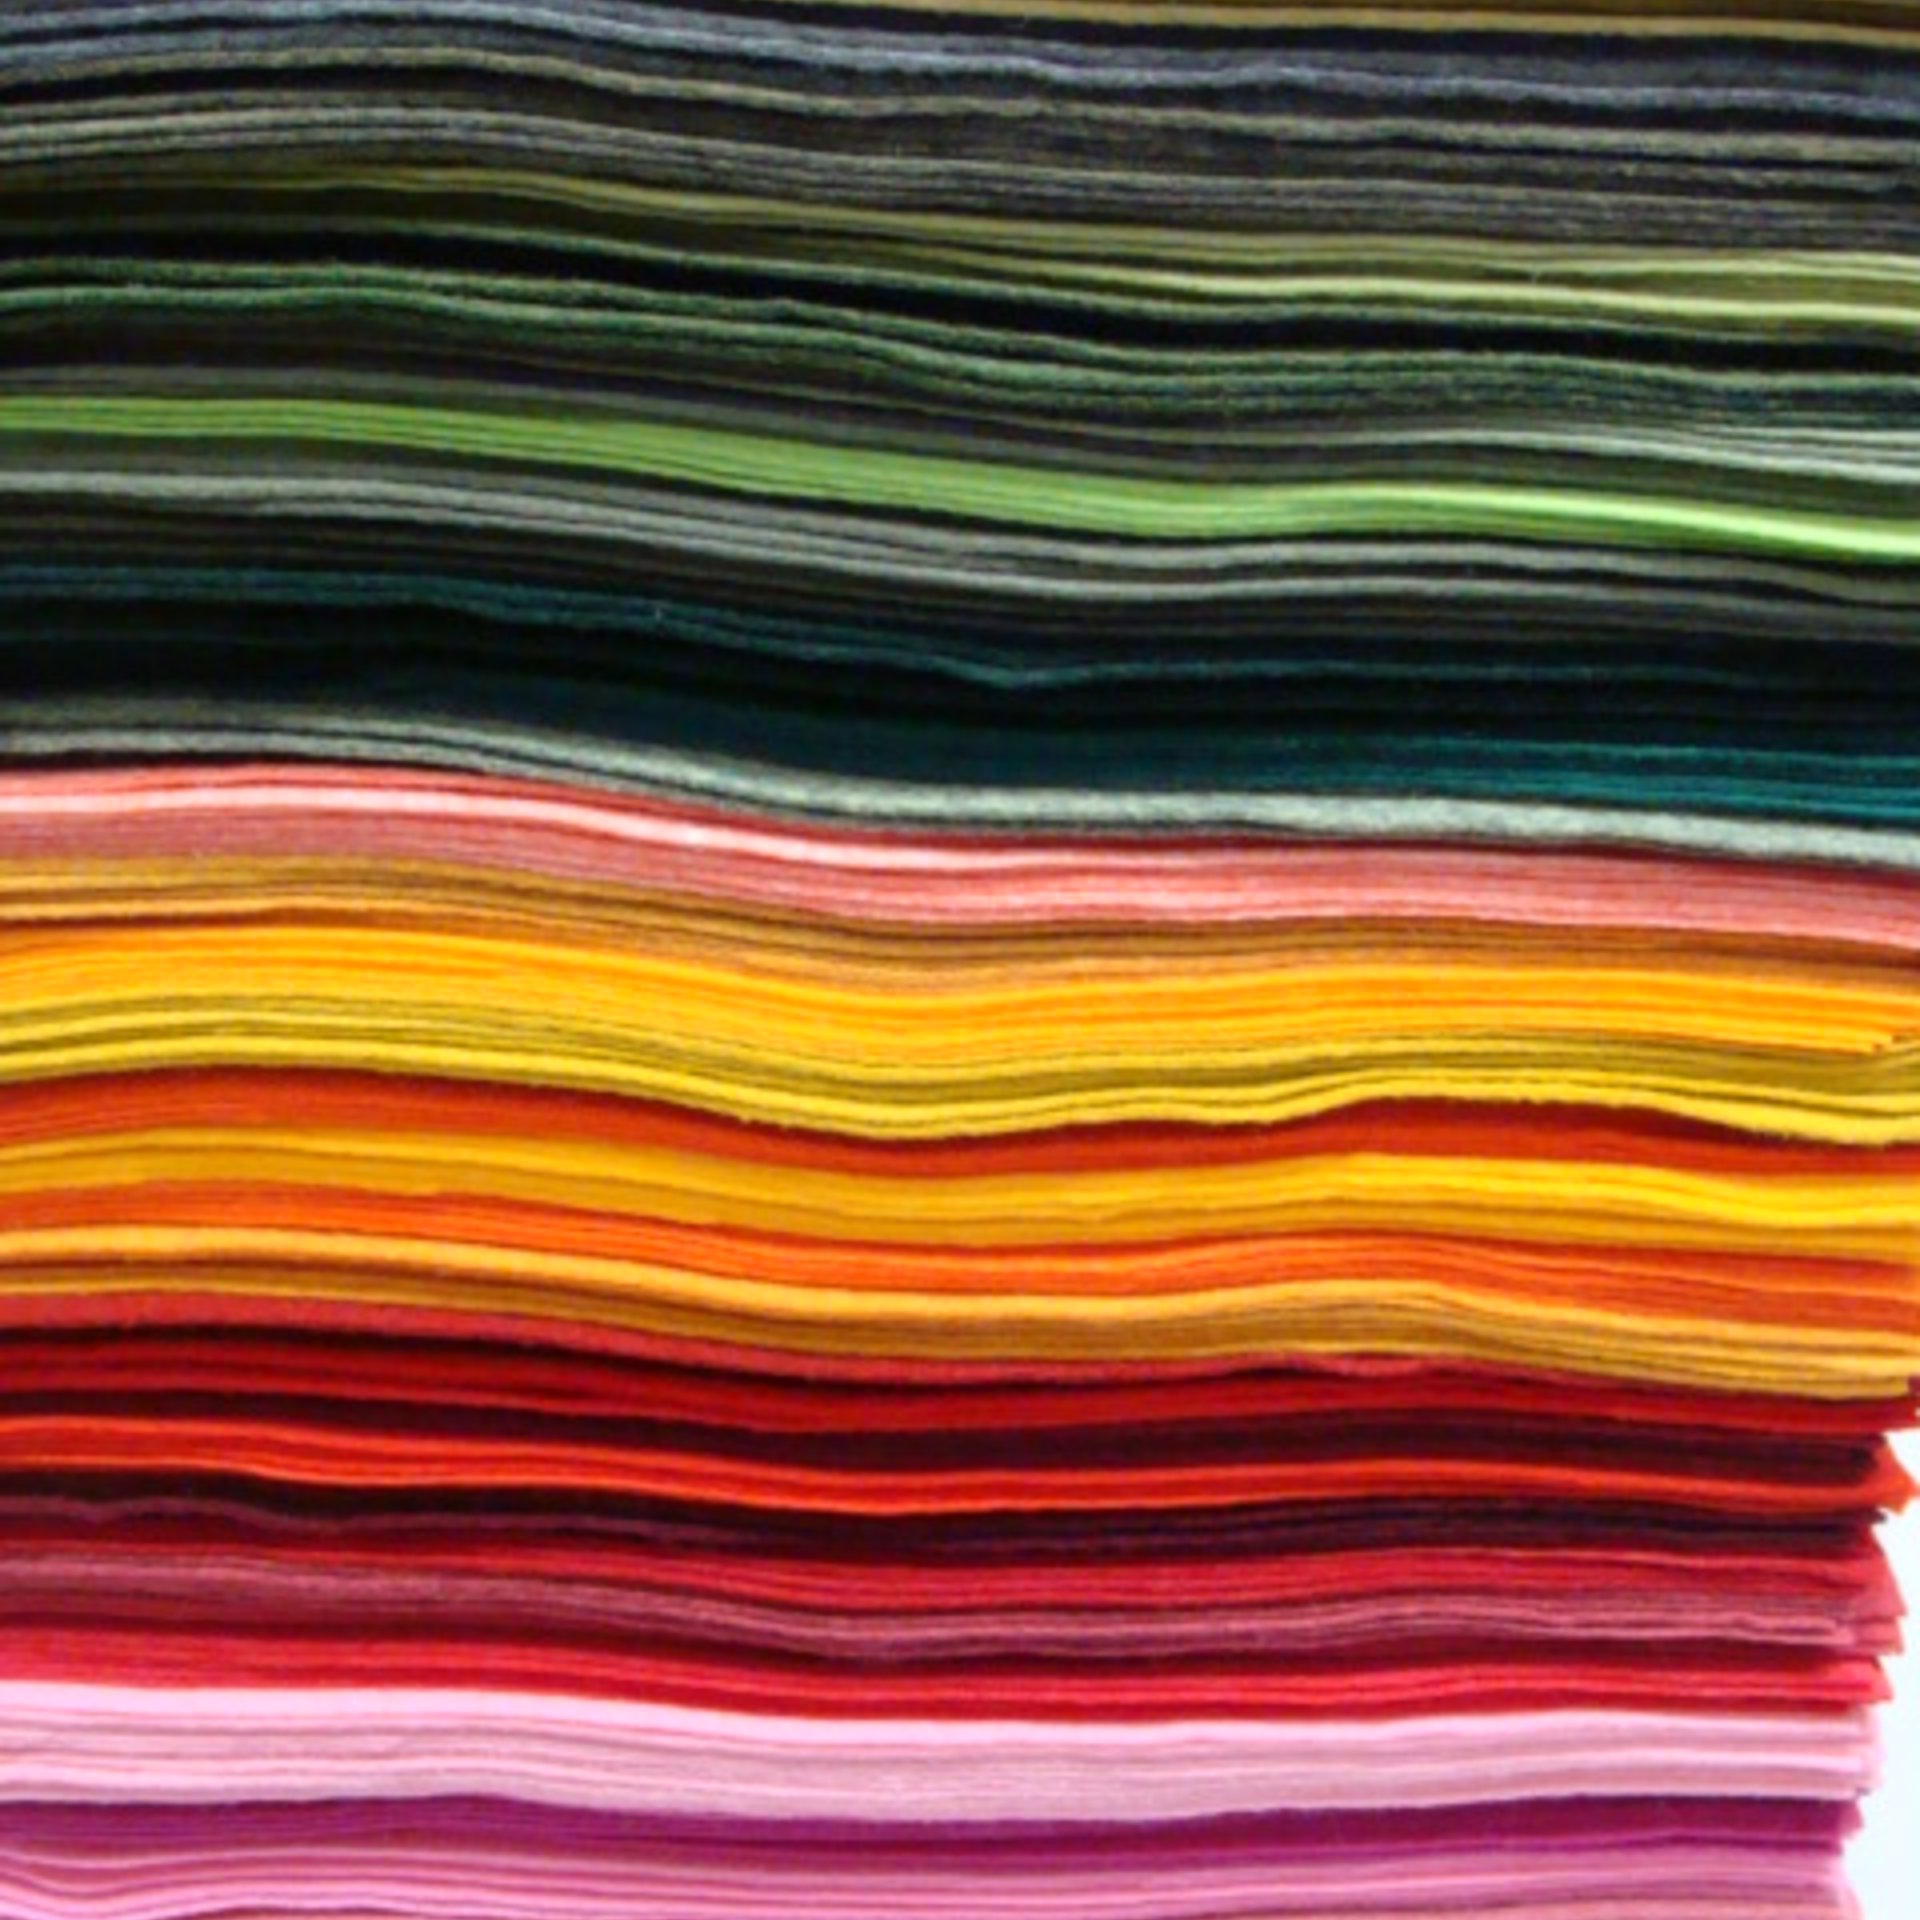 90 pcs. Wool Blend Felt Bundle 9"x12" Sheets All Felt Colors Crafting Applique Embroidery Sewing Felt